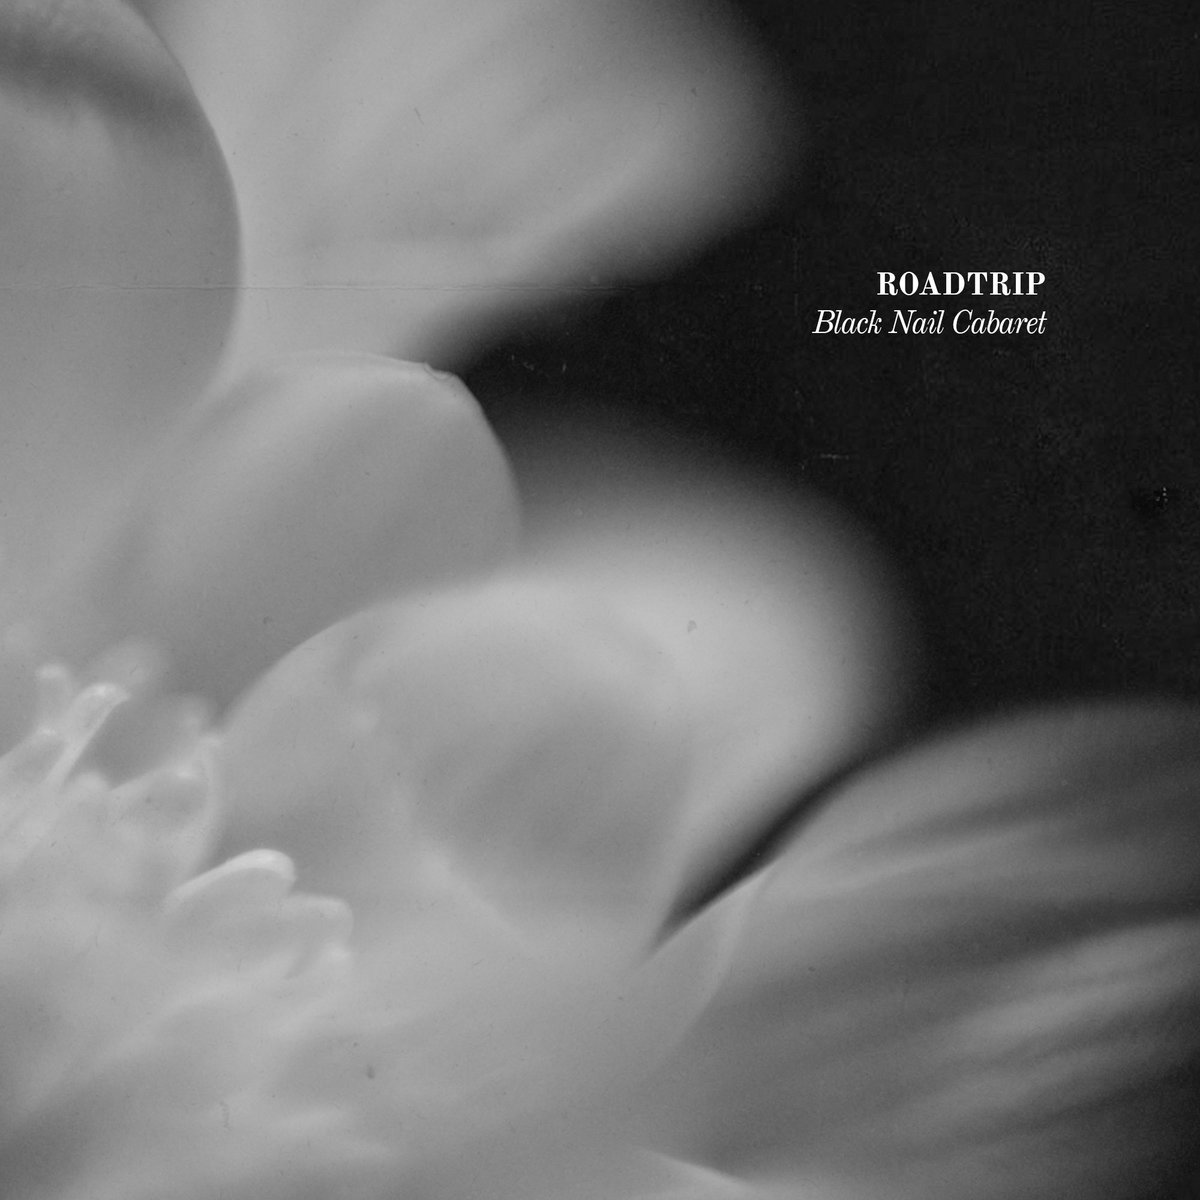 New song out from the upcoming album, Chrysanthemum. Listen to Roadtrip on Bandcamp: blacknailcabaret.bandcamp.com/track/roadtrip…